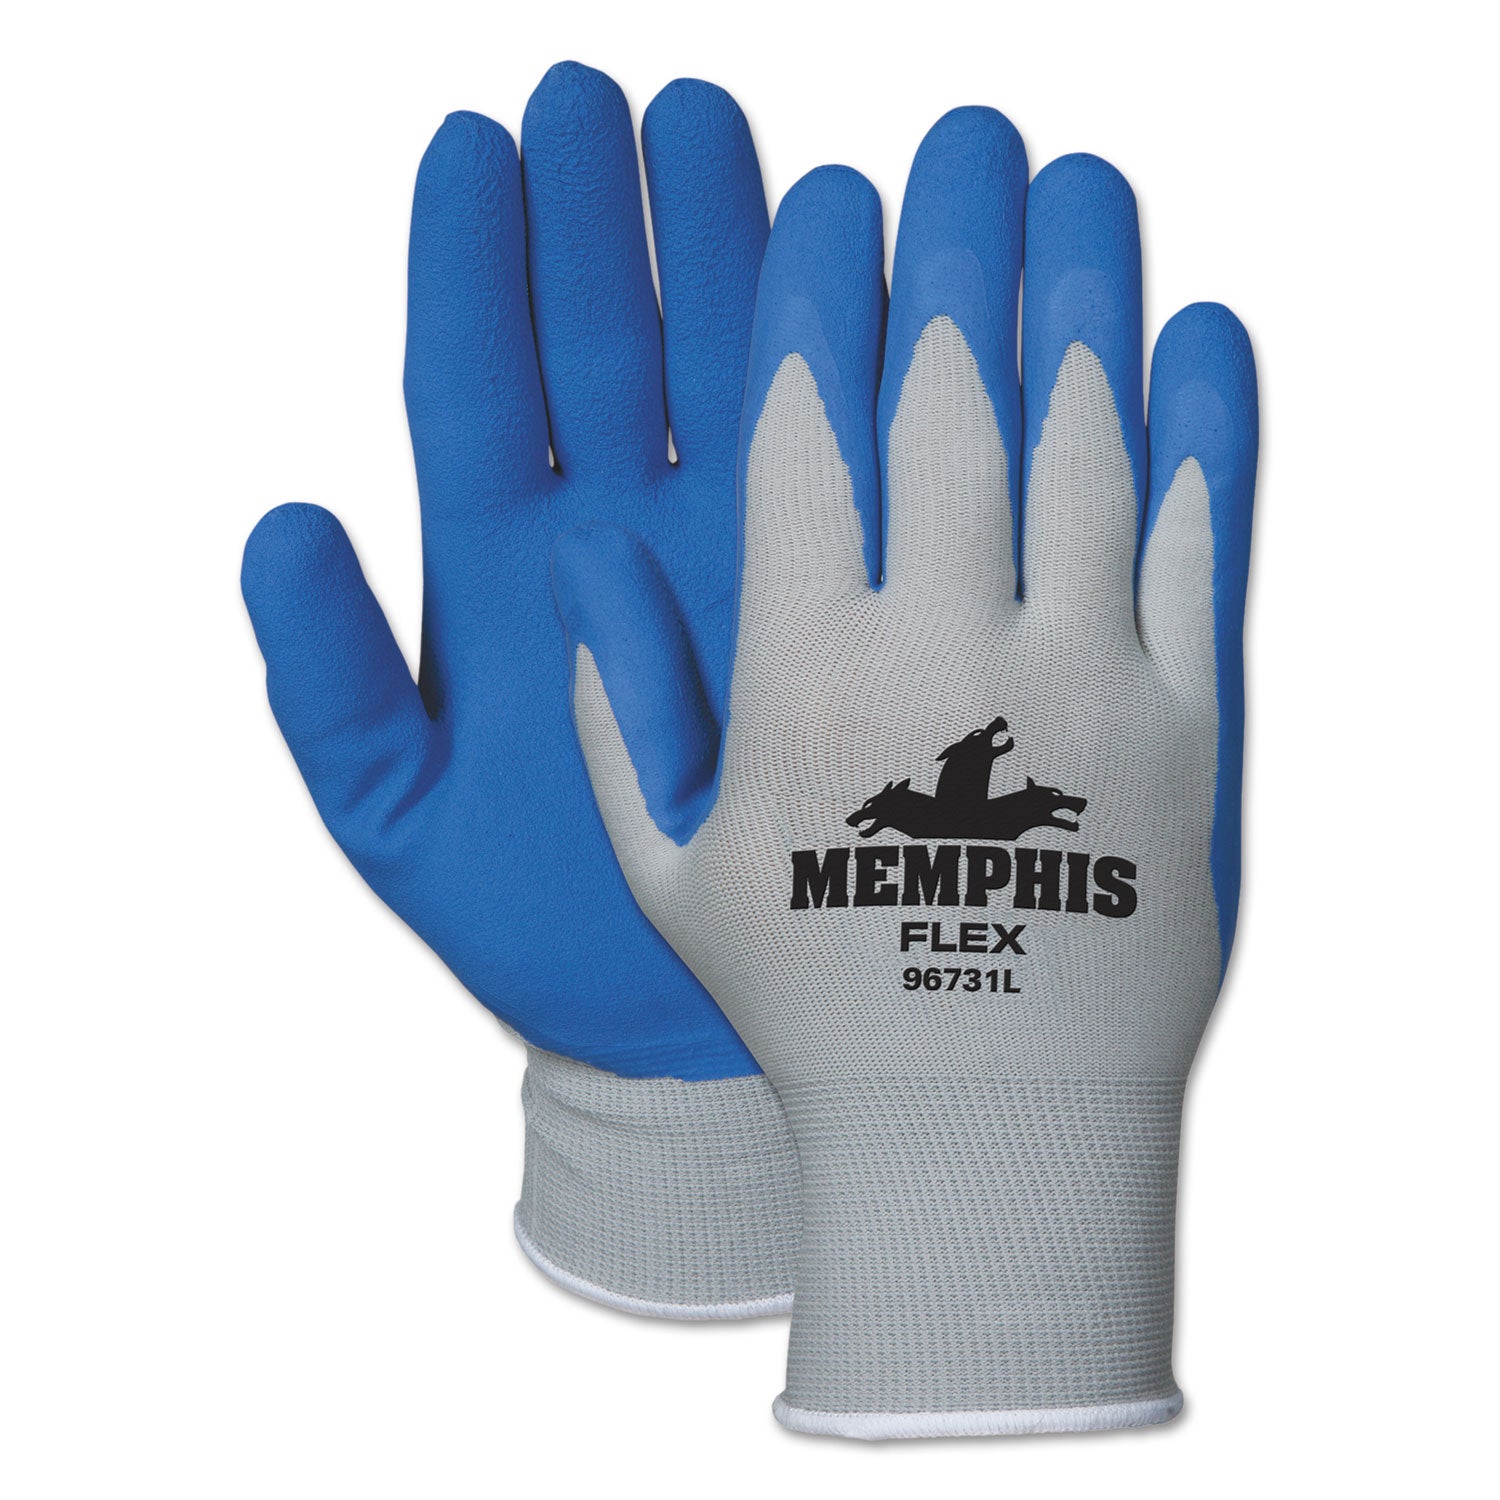 Memphis Flex Seamless Nylon Knit Gloves, Large, Blue/Gray, Pair - 